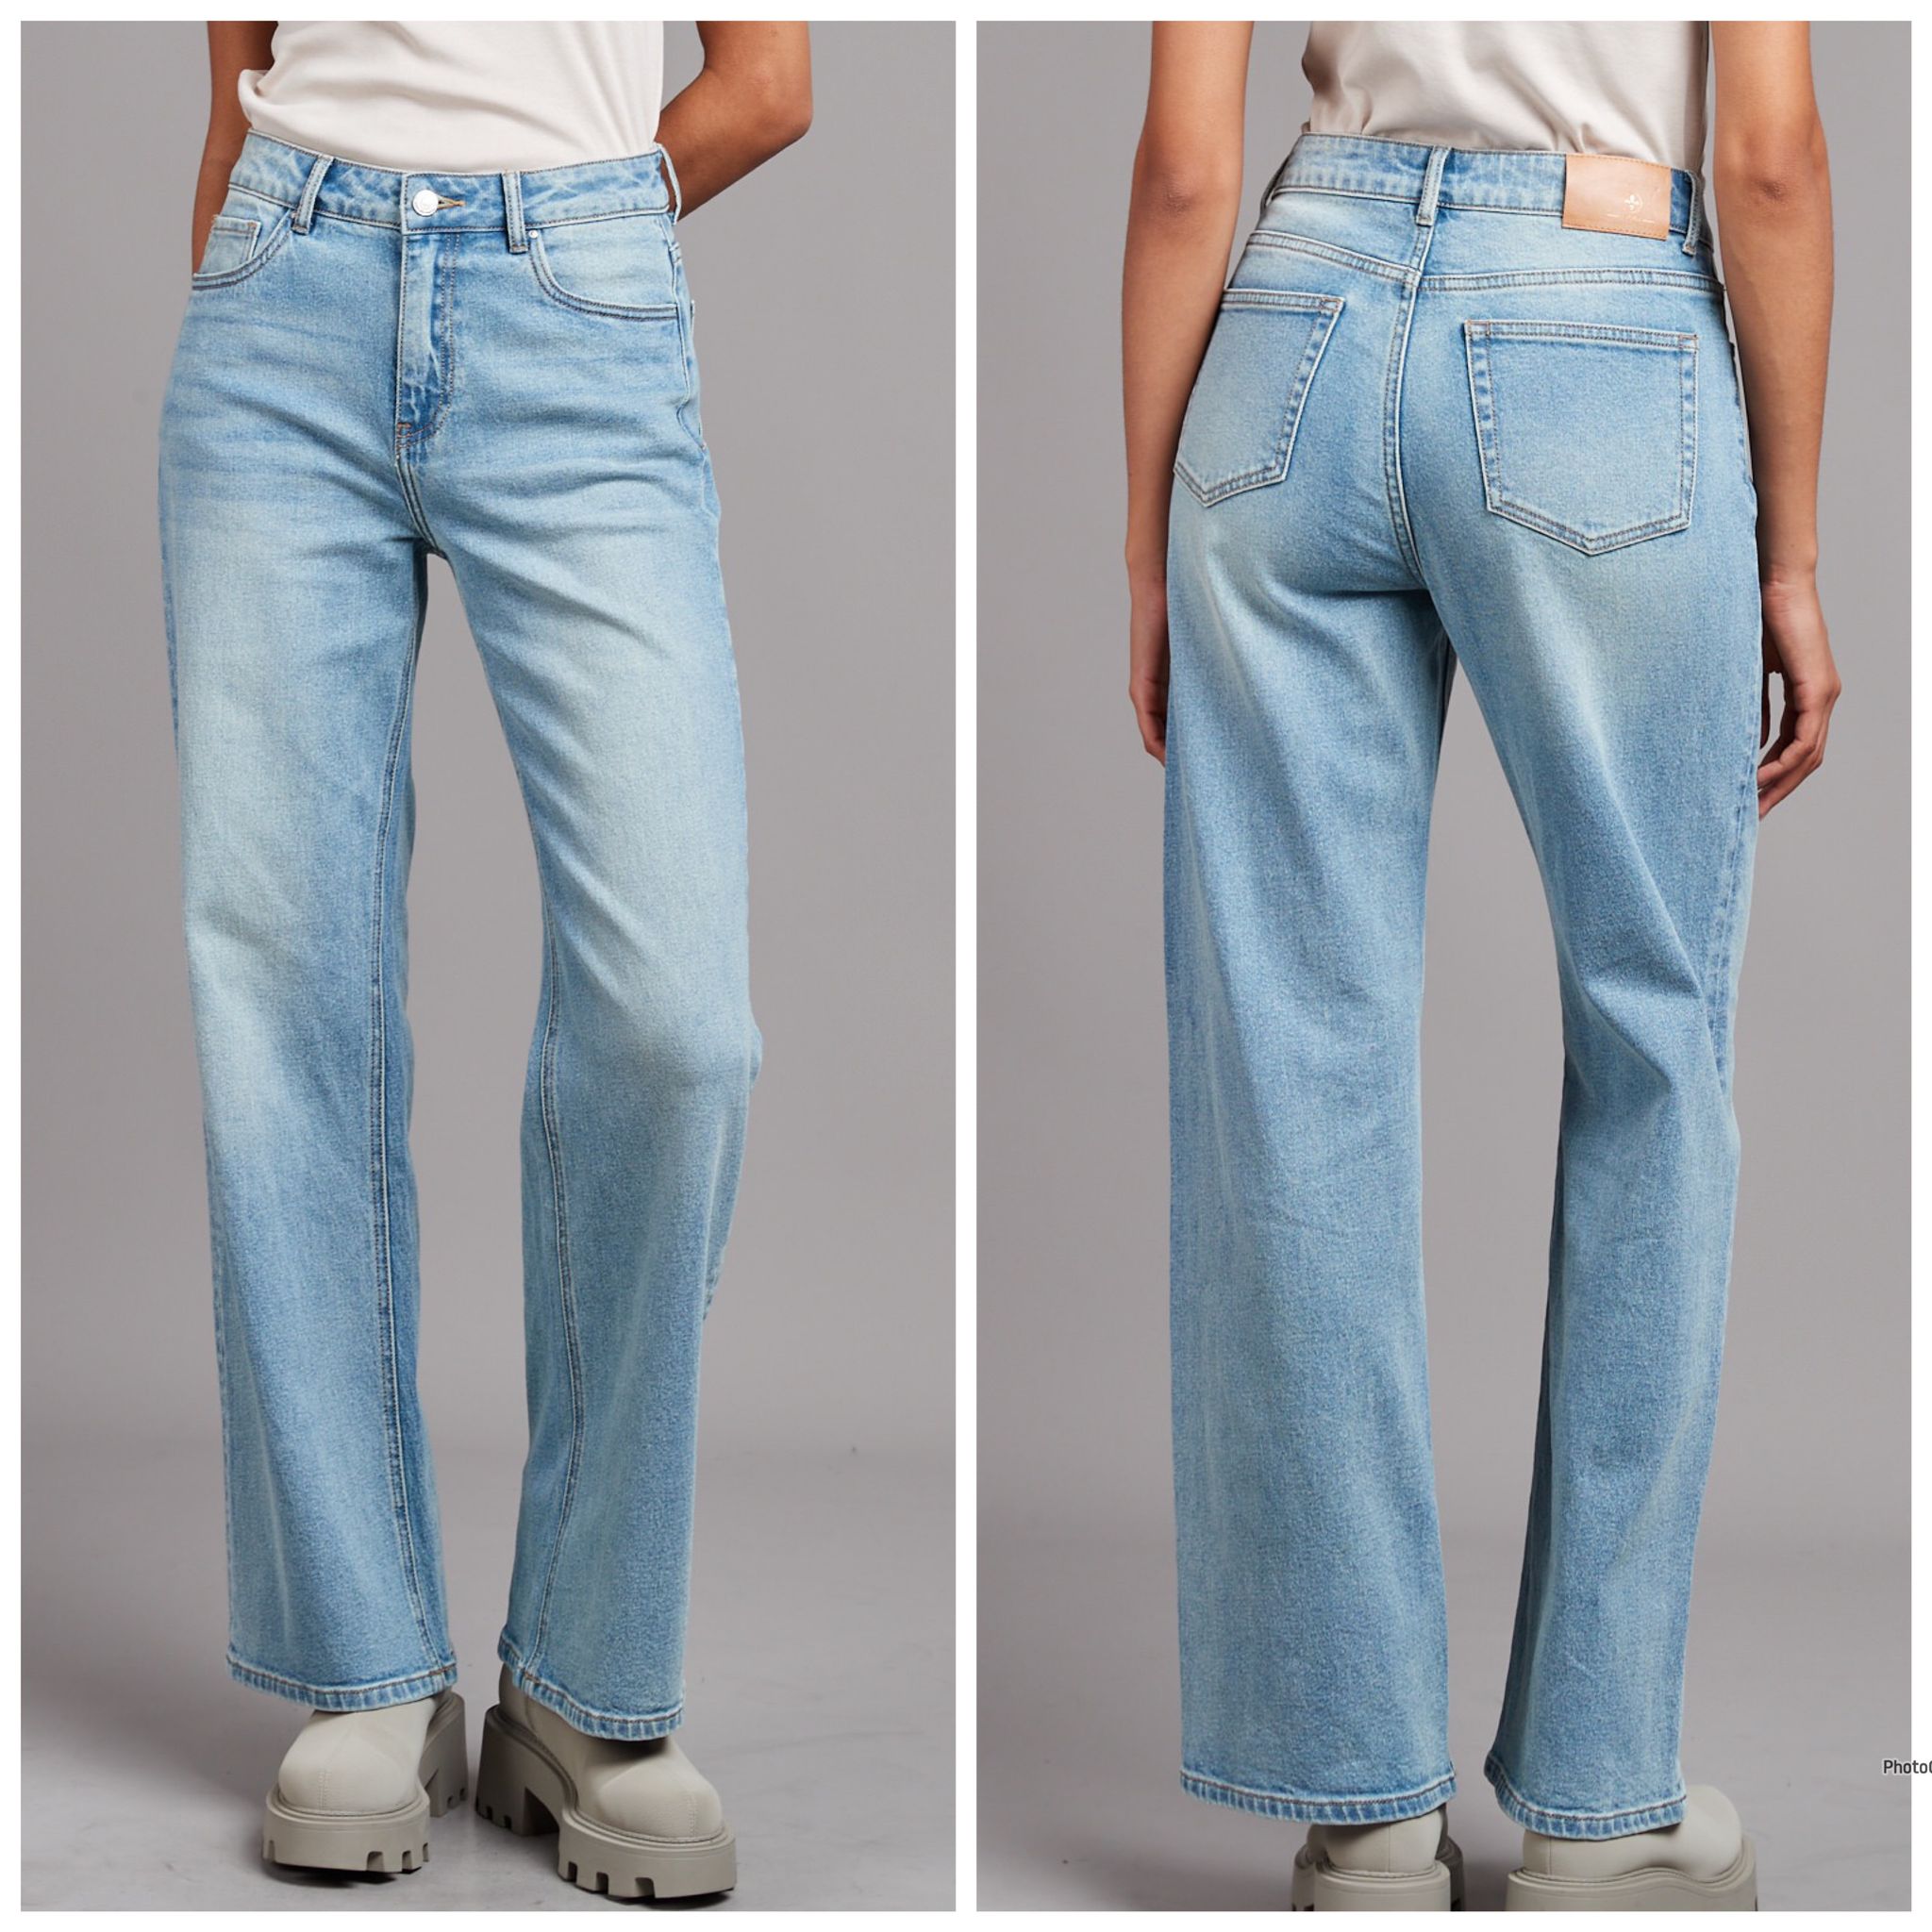 Jeans Wide Leg 21300-4 Washed Blue